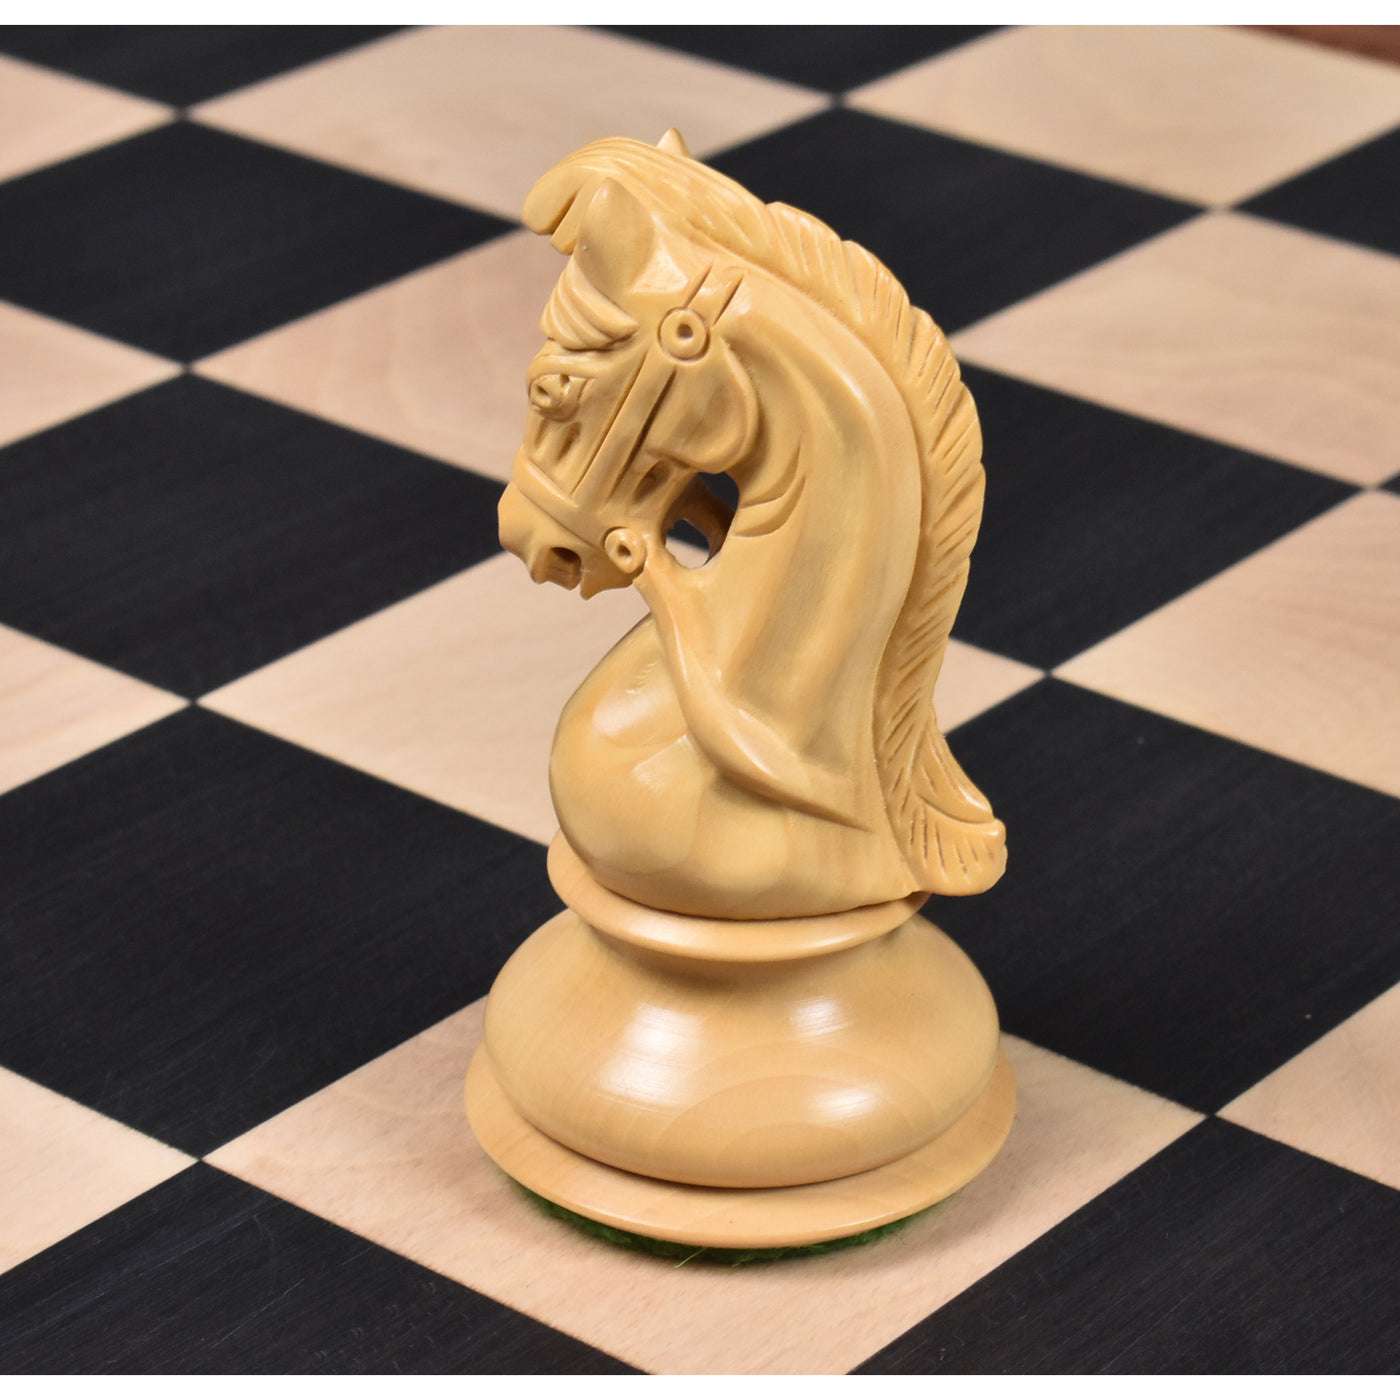  Royal Sultan Staunton Luxury Chess Pieces Only Set